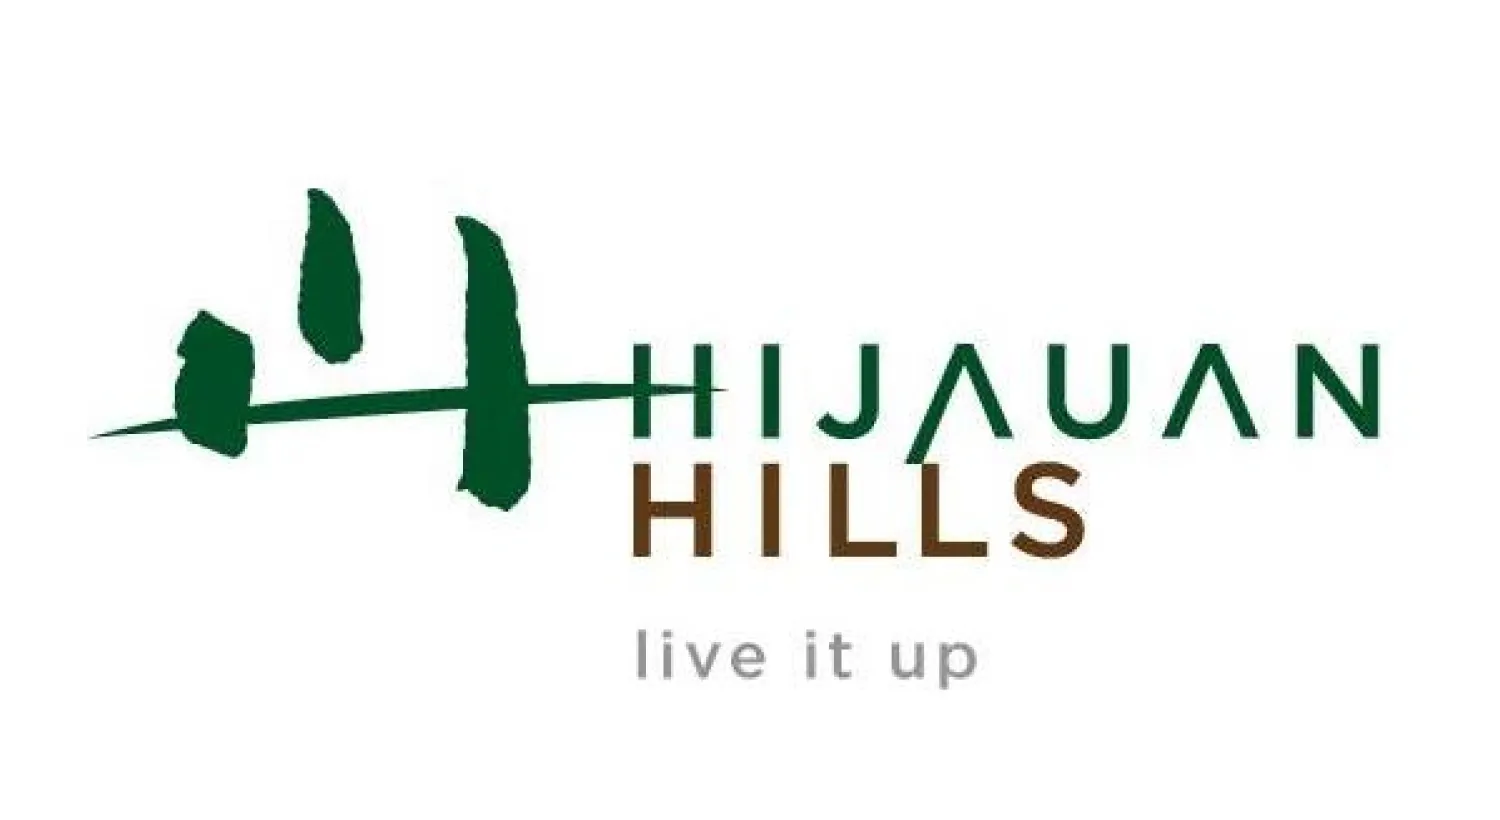 hijauan hills logo